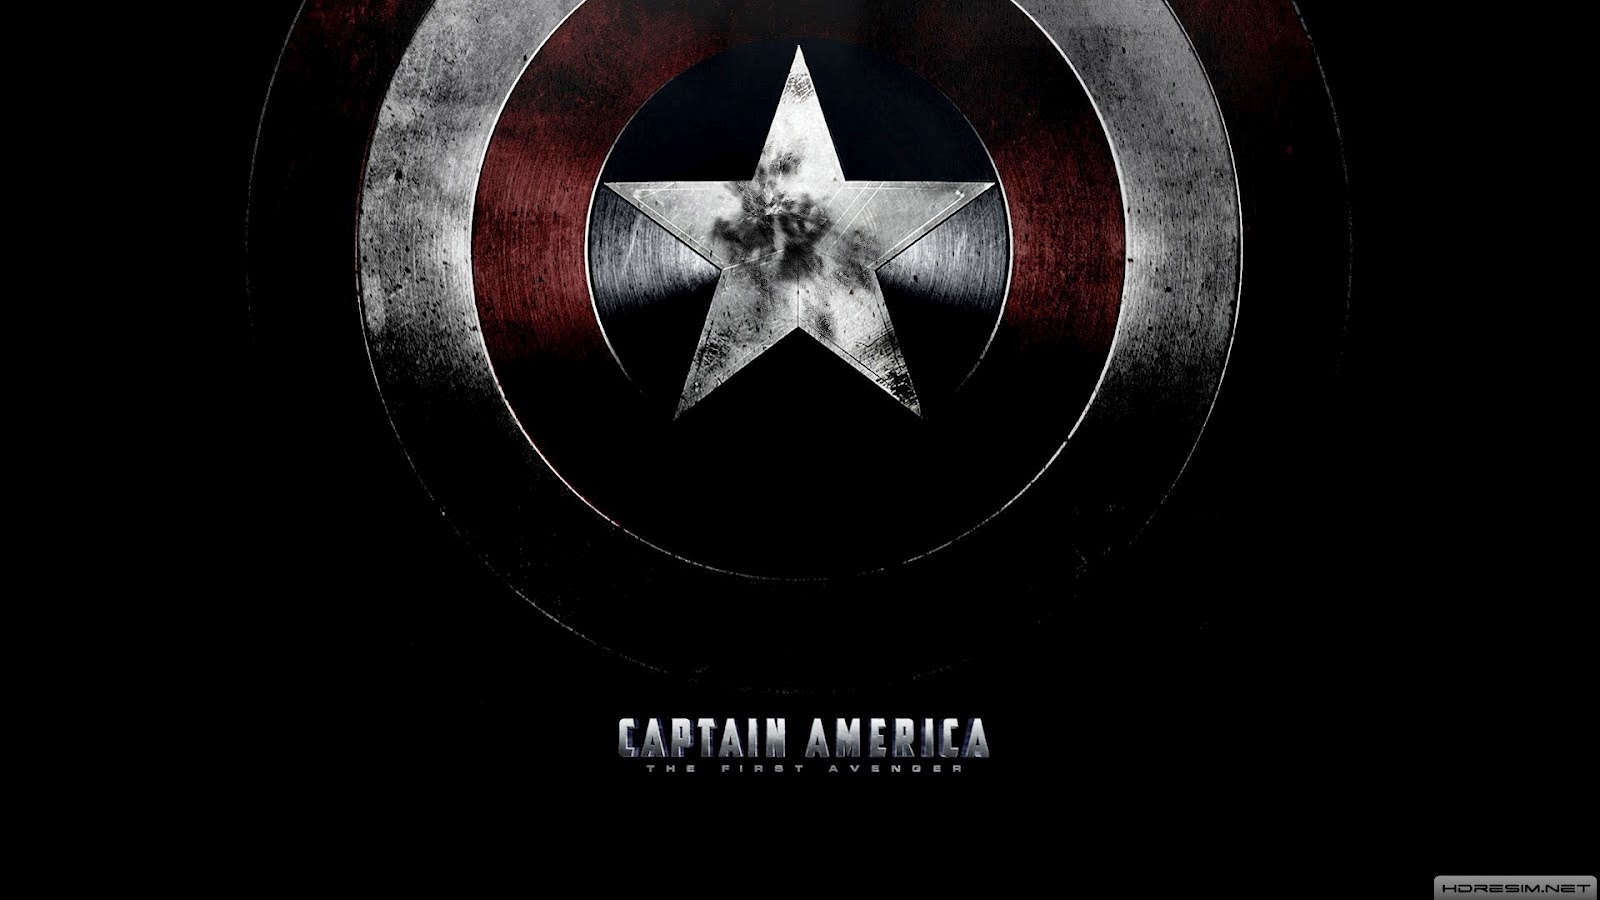 kaptan amerika wallpaper,captain america,superhero,fictional character,logo,movie